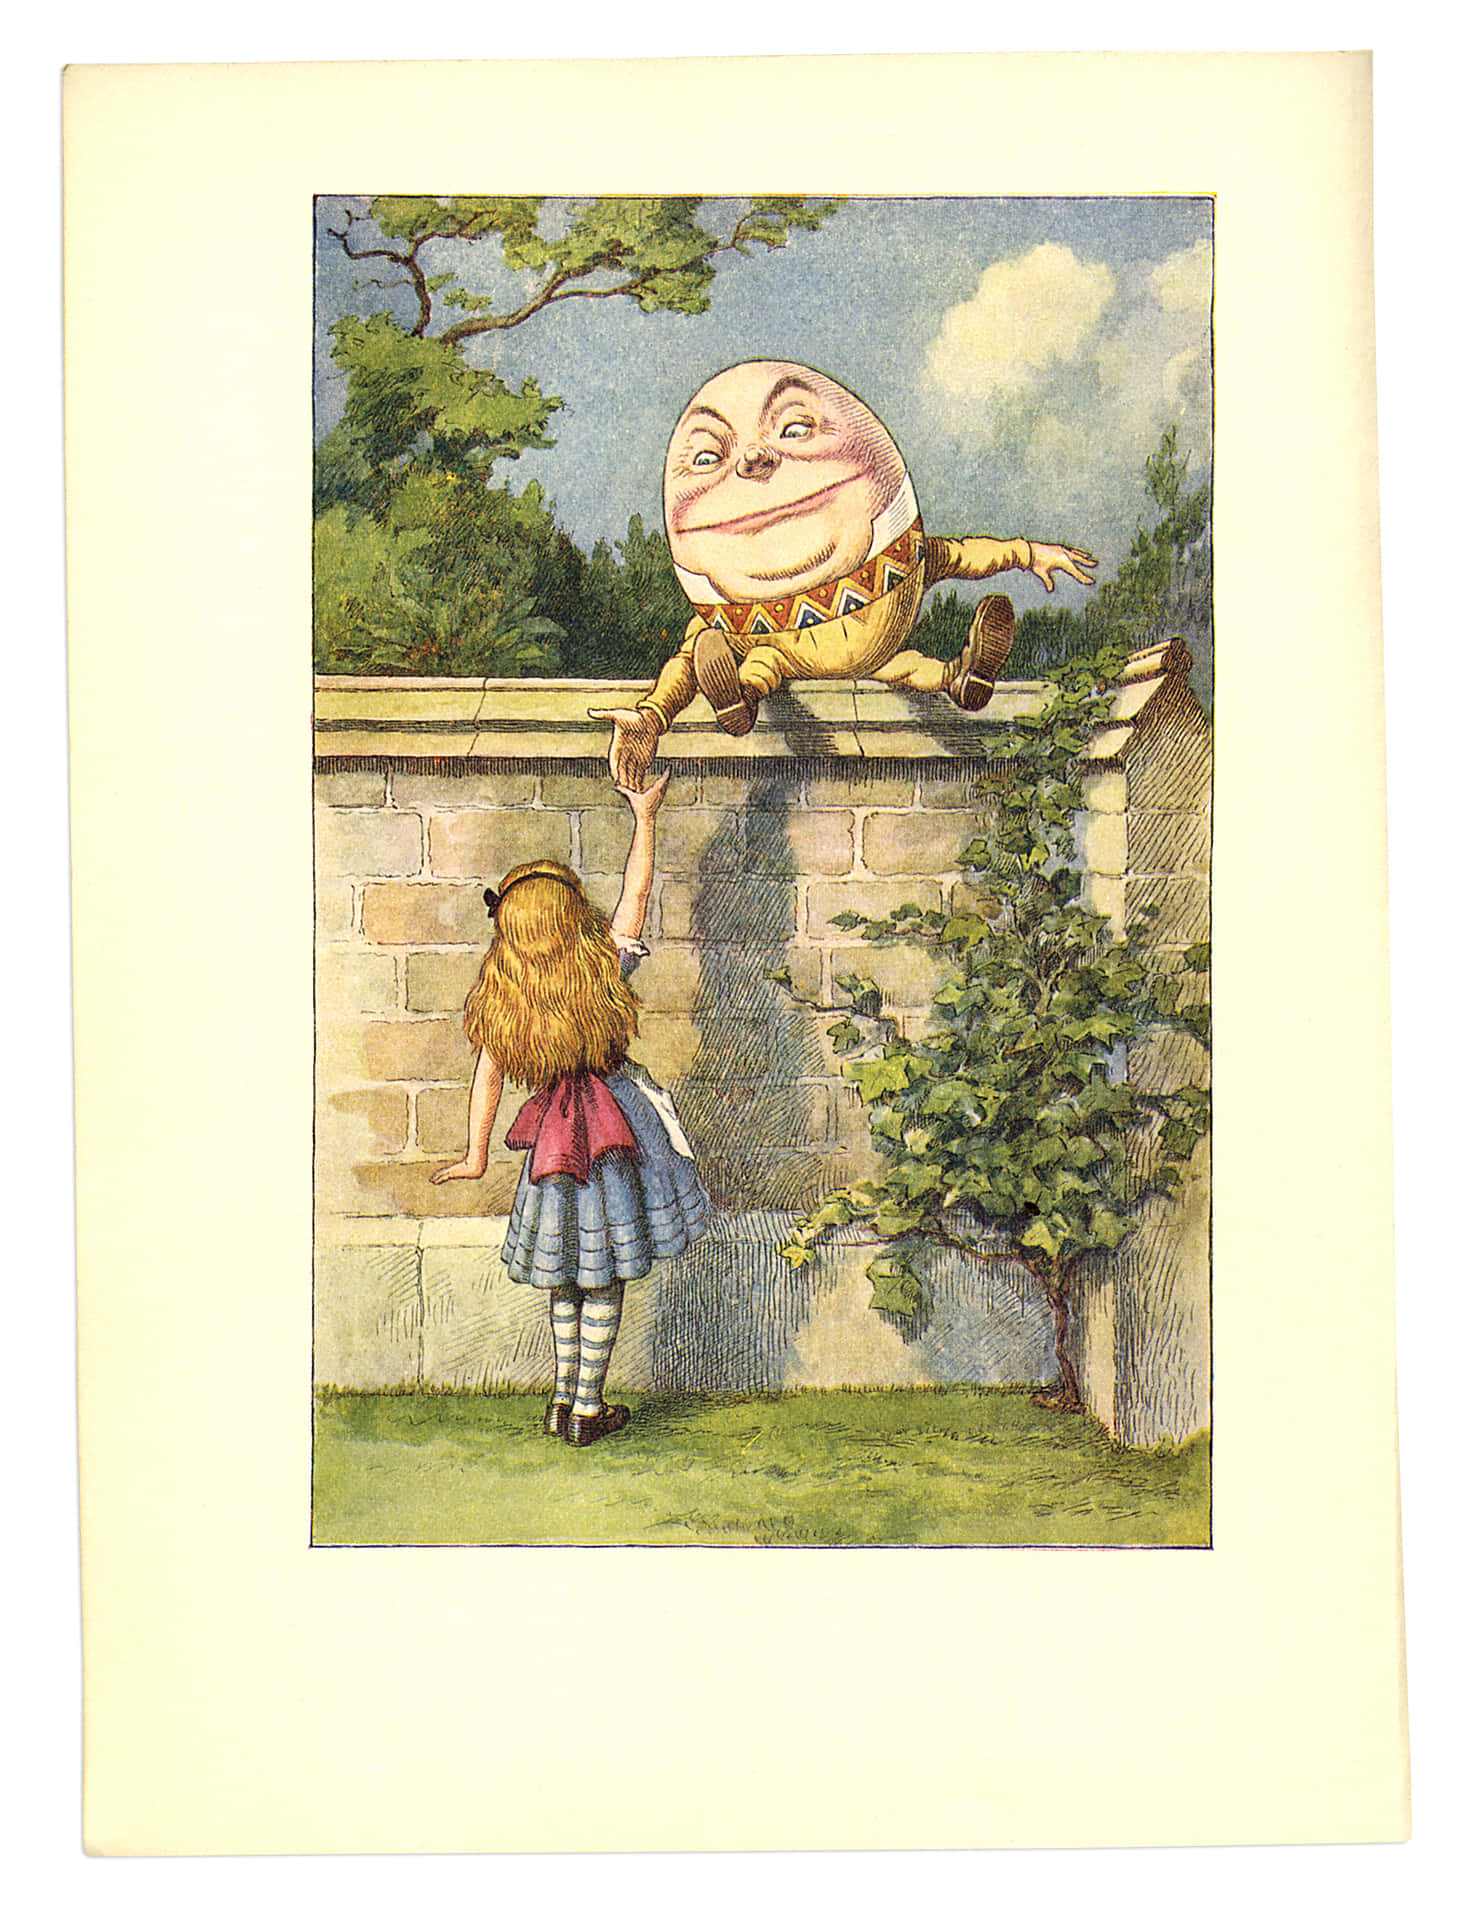 A Vibrant Illustration of Humpty Dumpty on a Wall